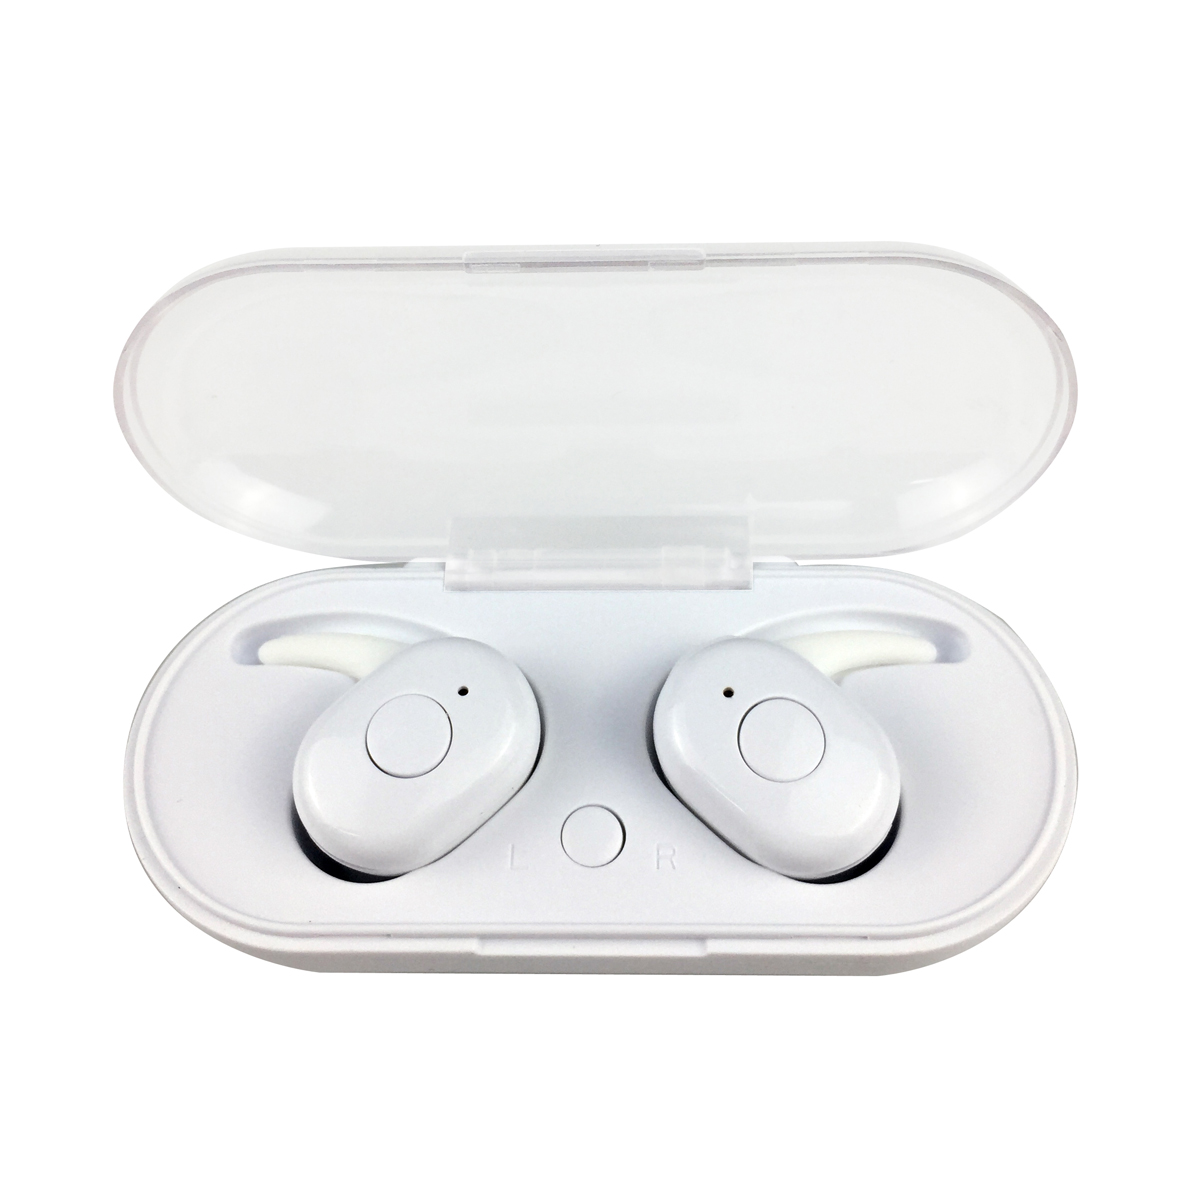 Freestyle Bluetooth v 5.0 in-ear sport headphones inc oplaadstation wit